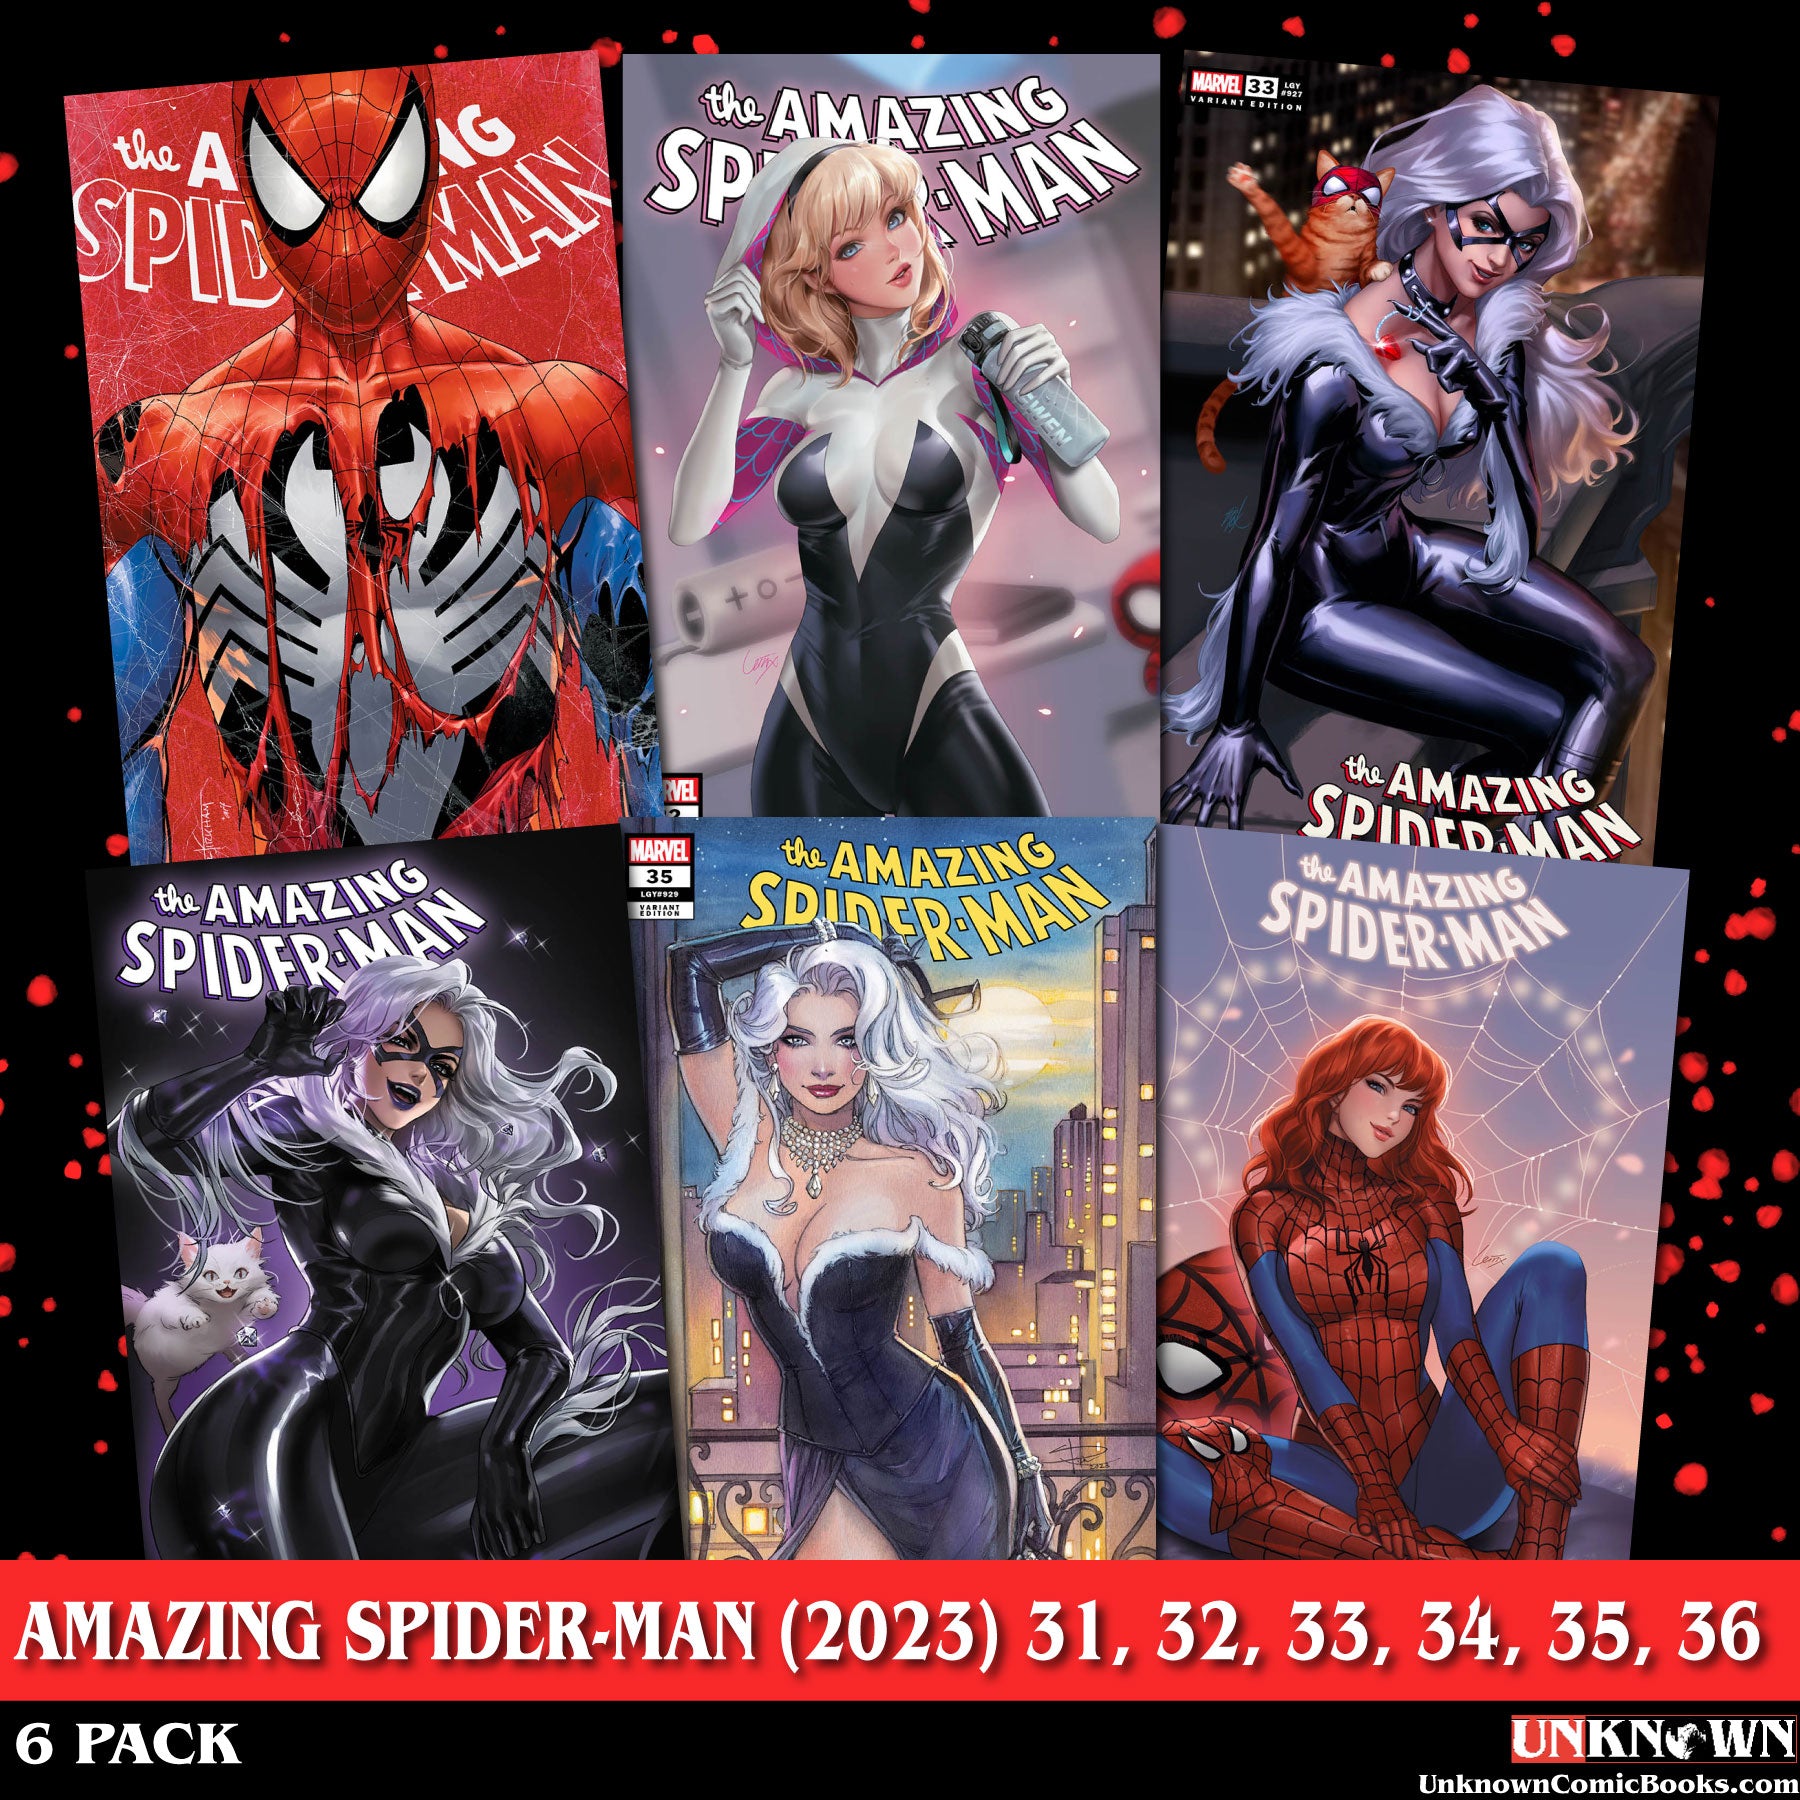 [6 PACK] AMAZING SPIDER-MAN (31-36) #31 #32 #33 #34 #35 #36 UNKNOWN COMICS EXCLUSIVE VAR (10/25/2023)